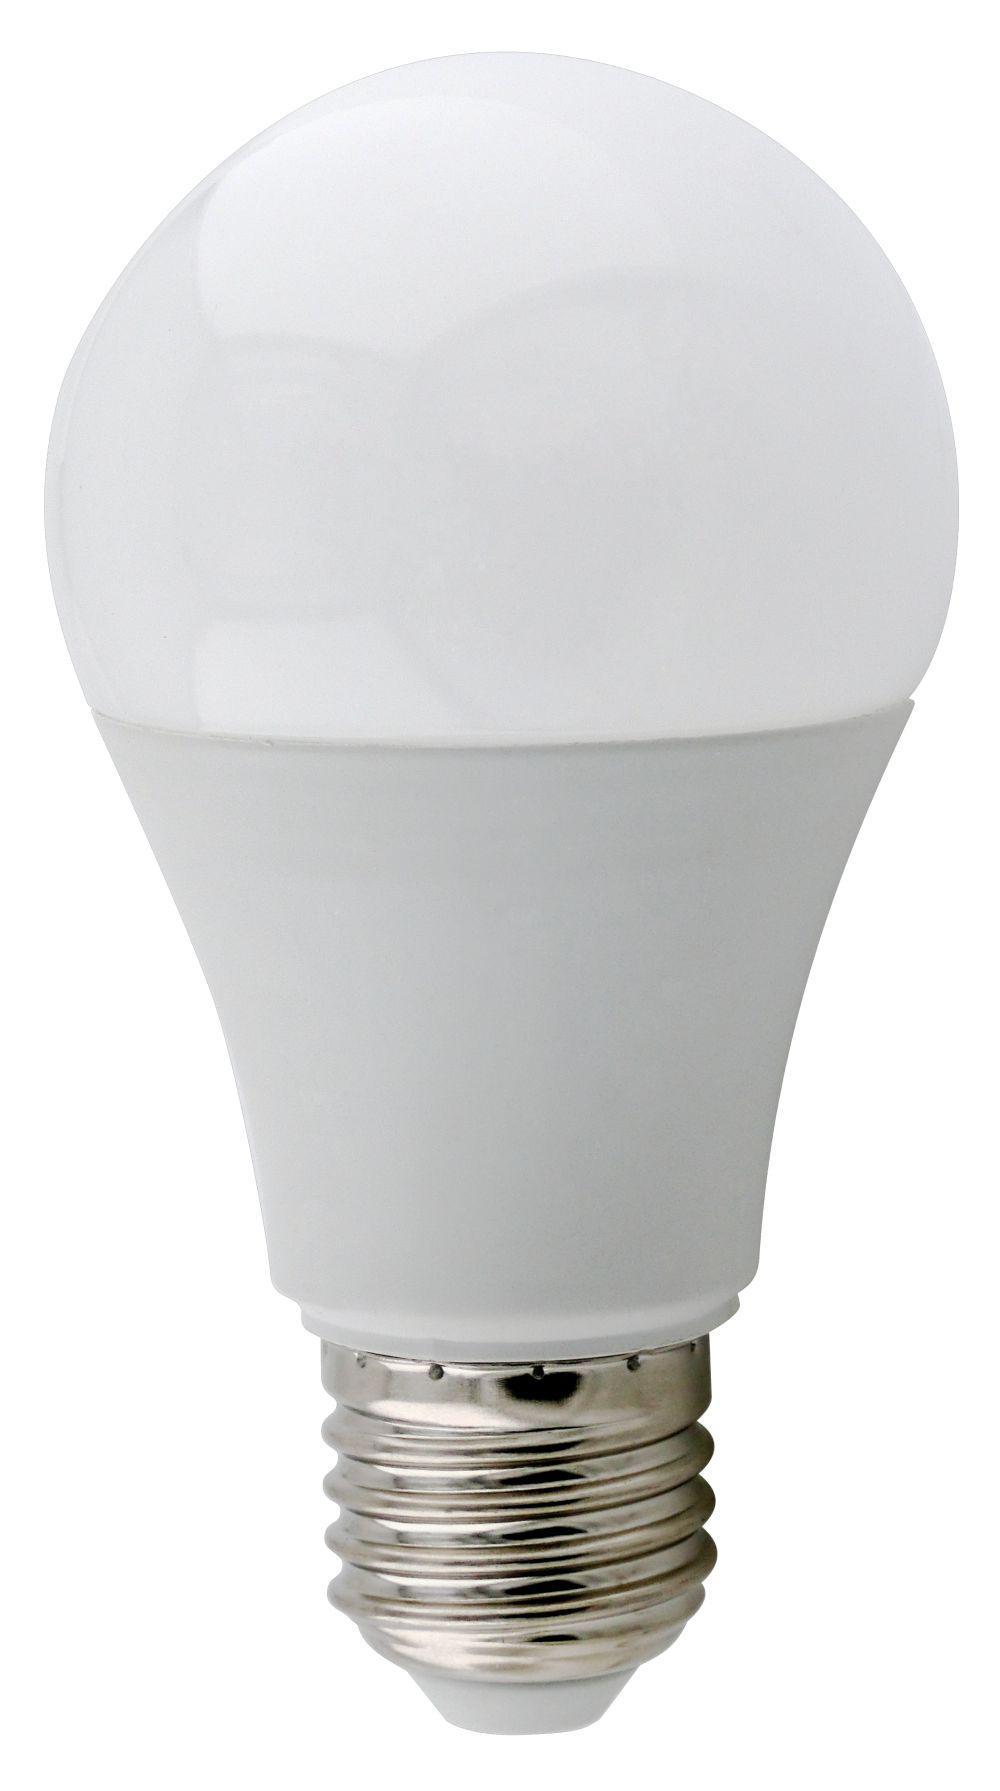 90121099 Лампа Premium светодионая E27 12 Вт груша 960 Лм теплый свет STLM-0112311 ECOLA